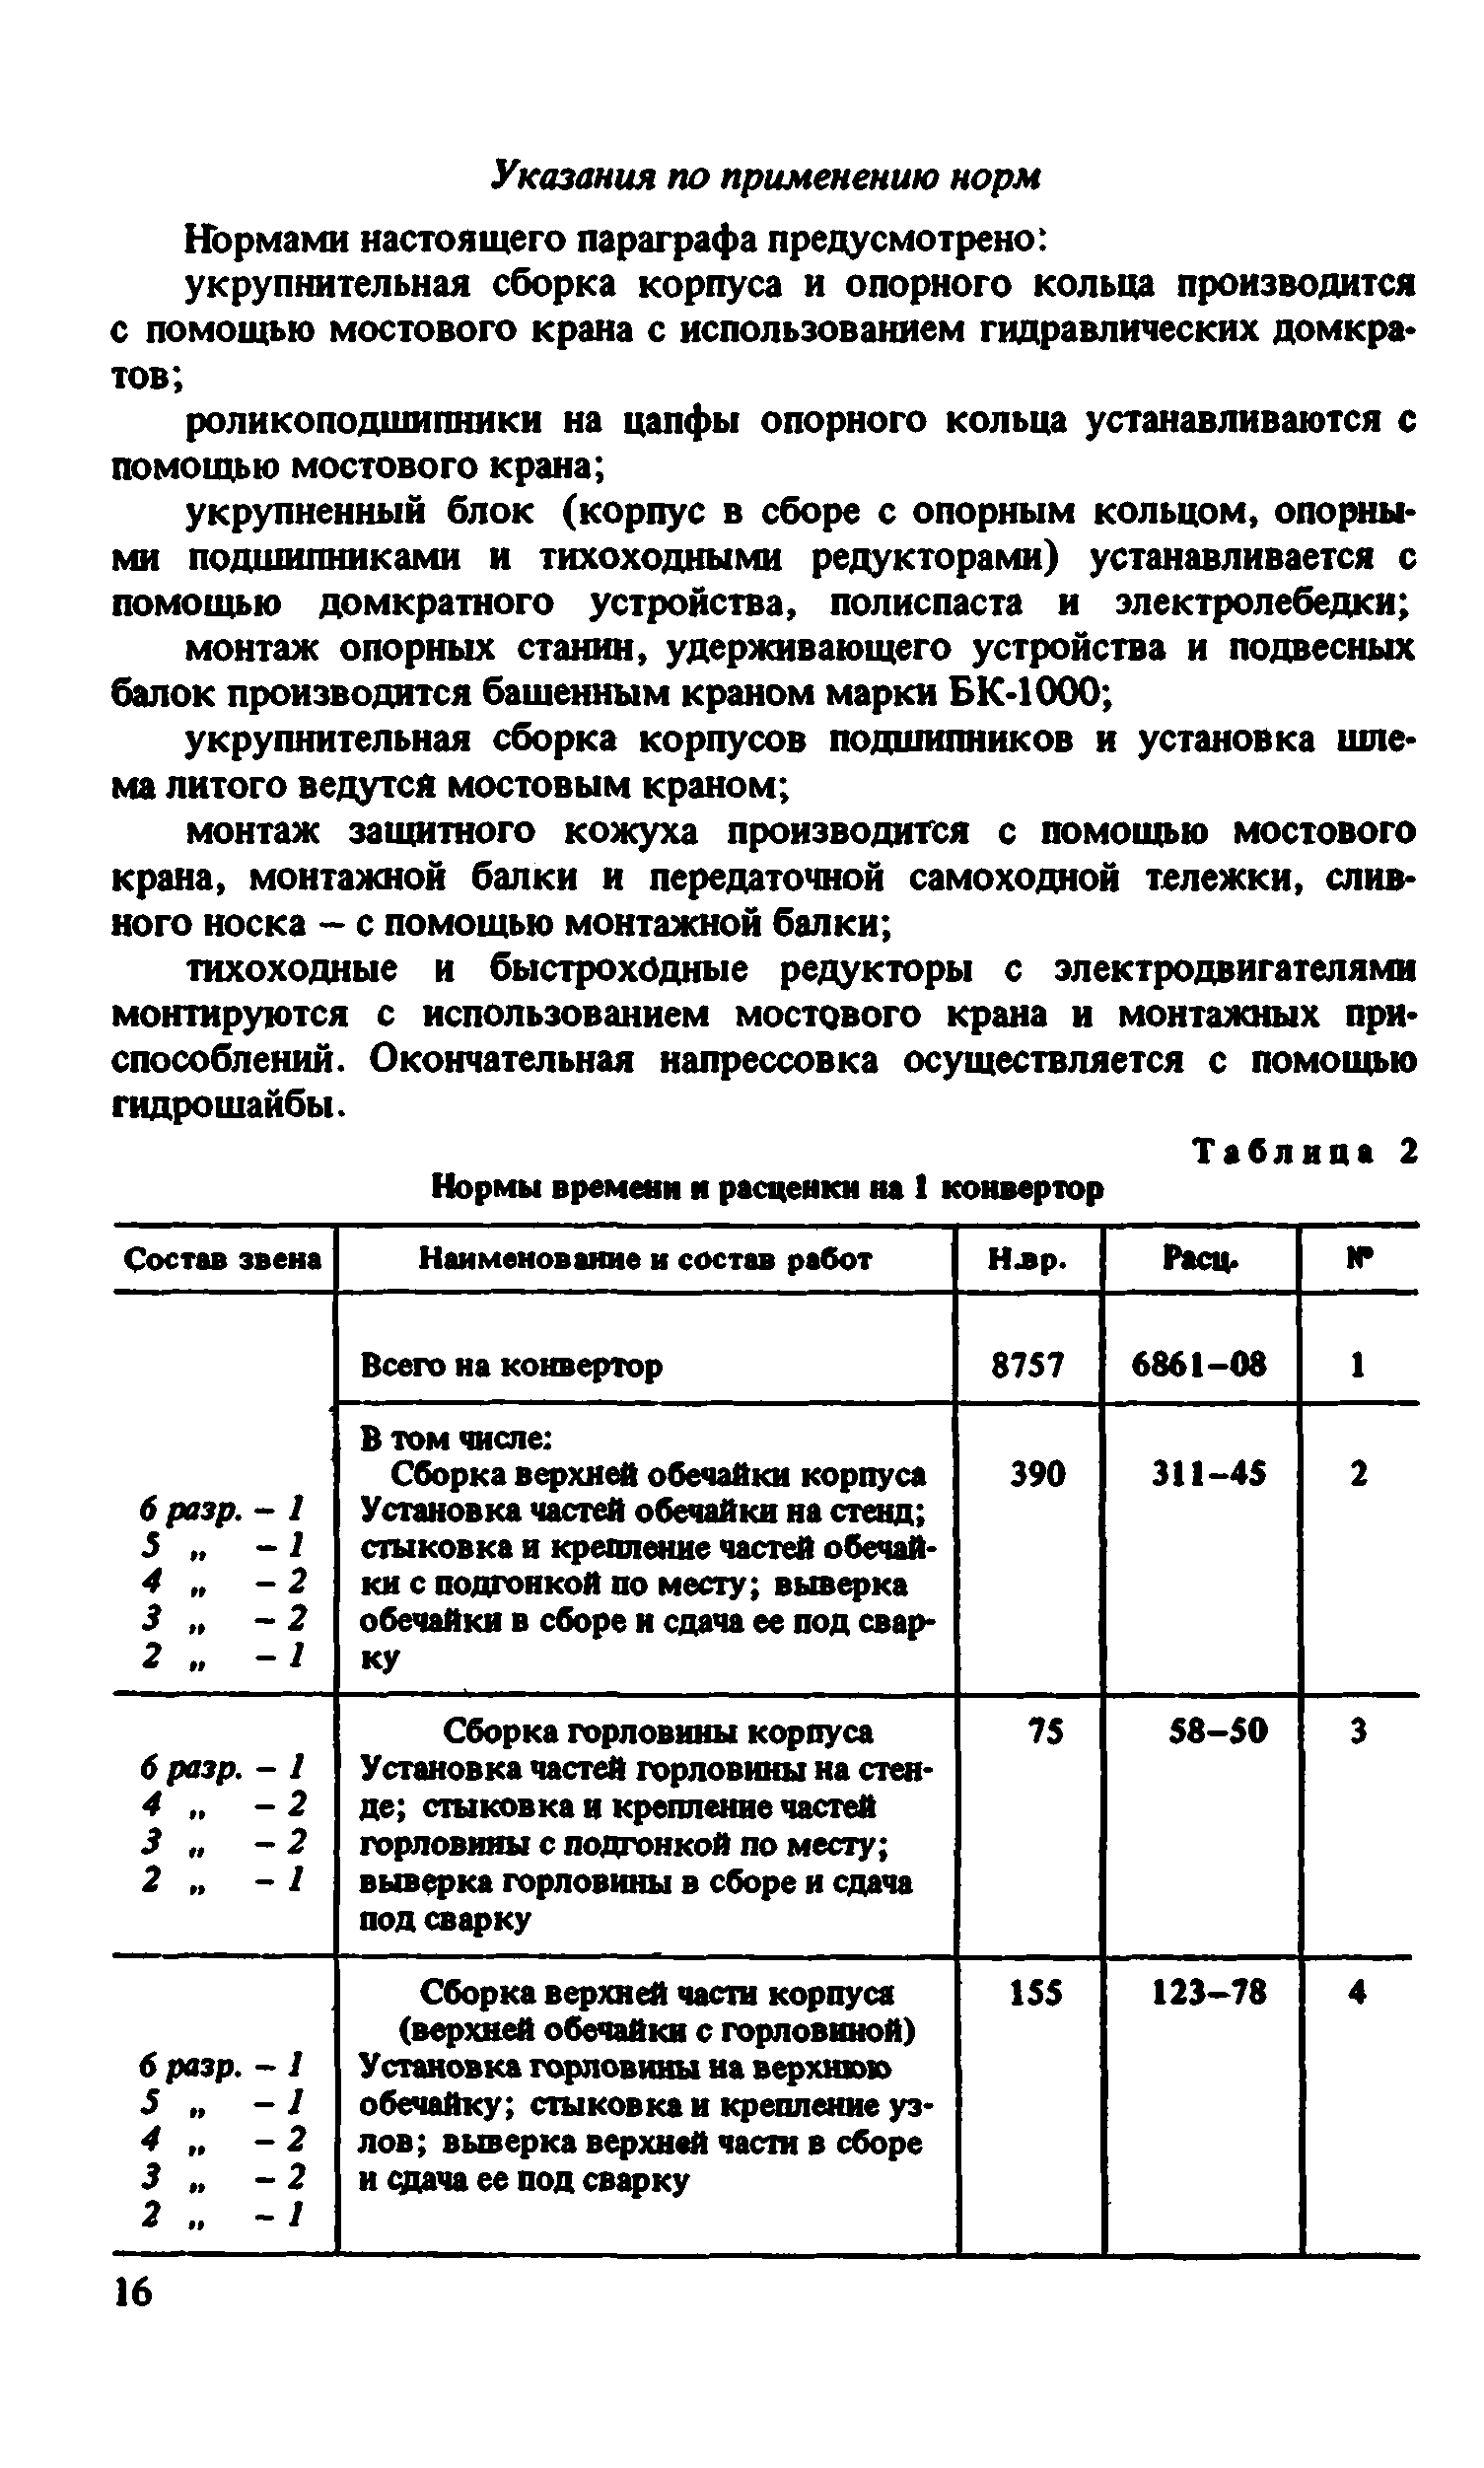 ВНиР В6-4